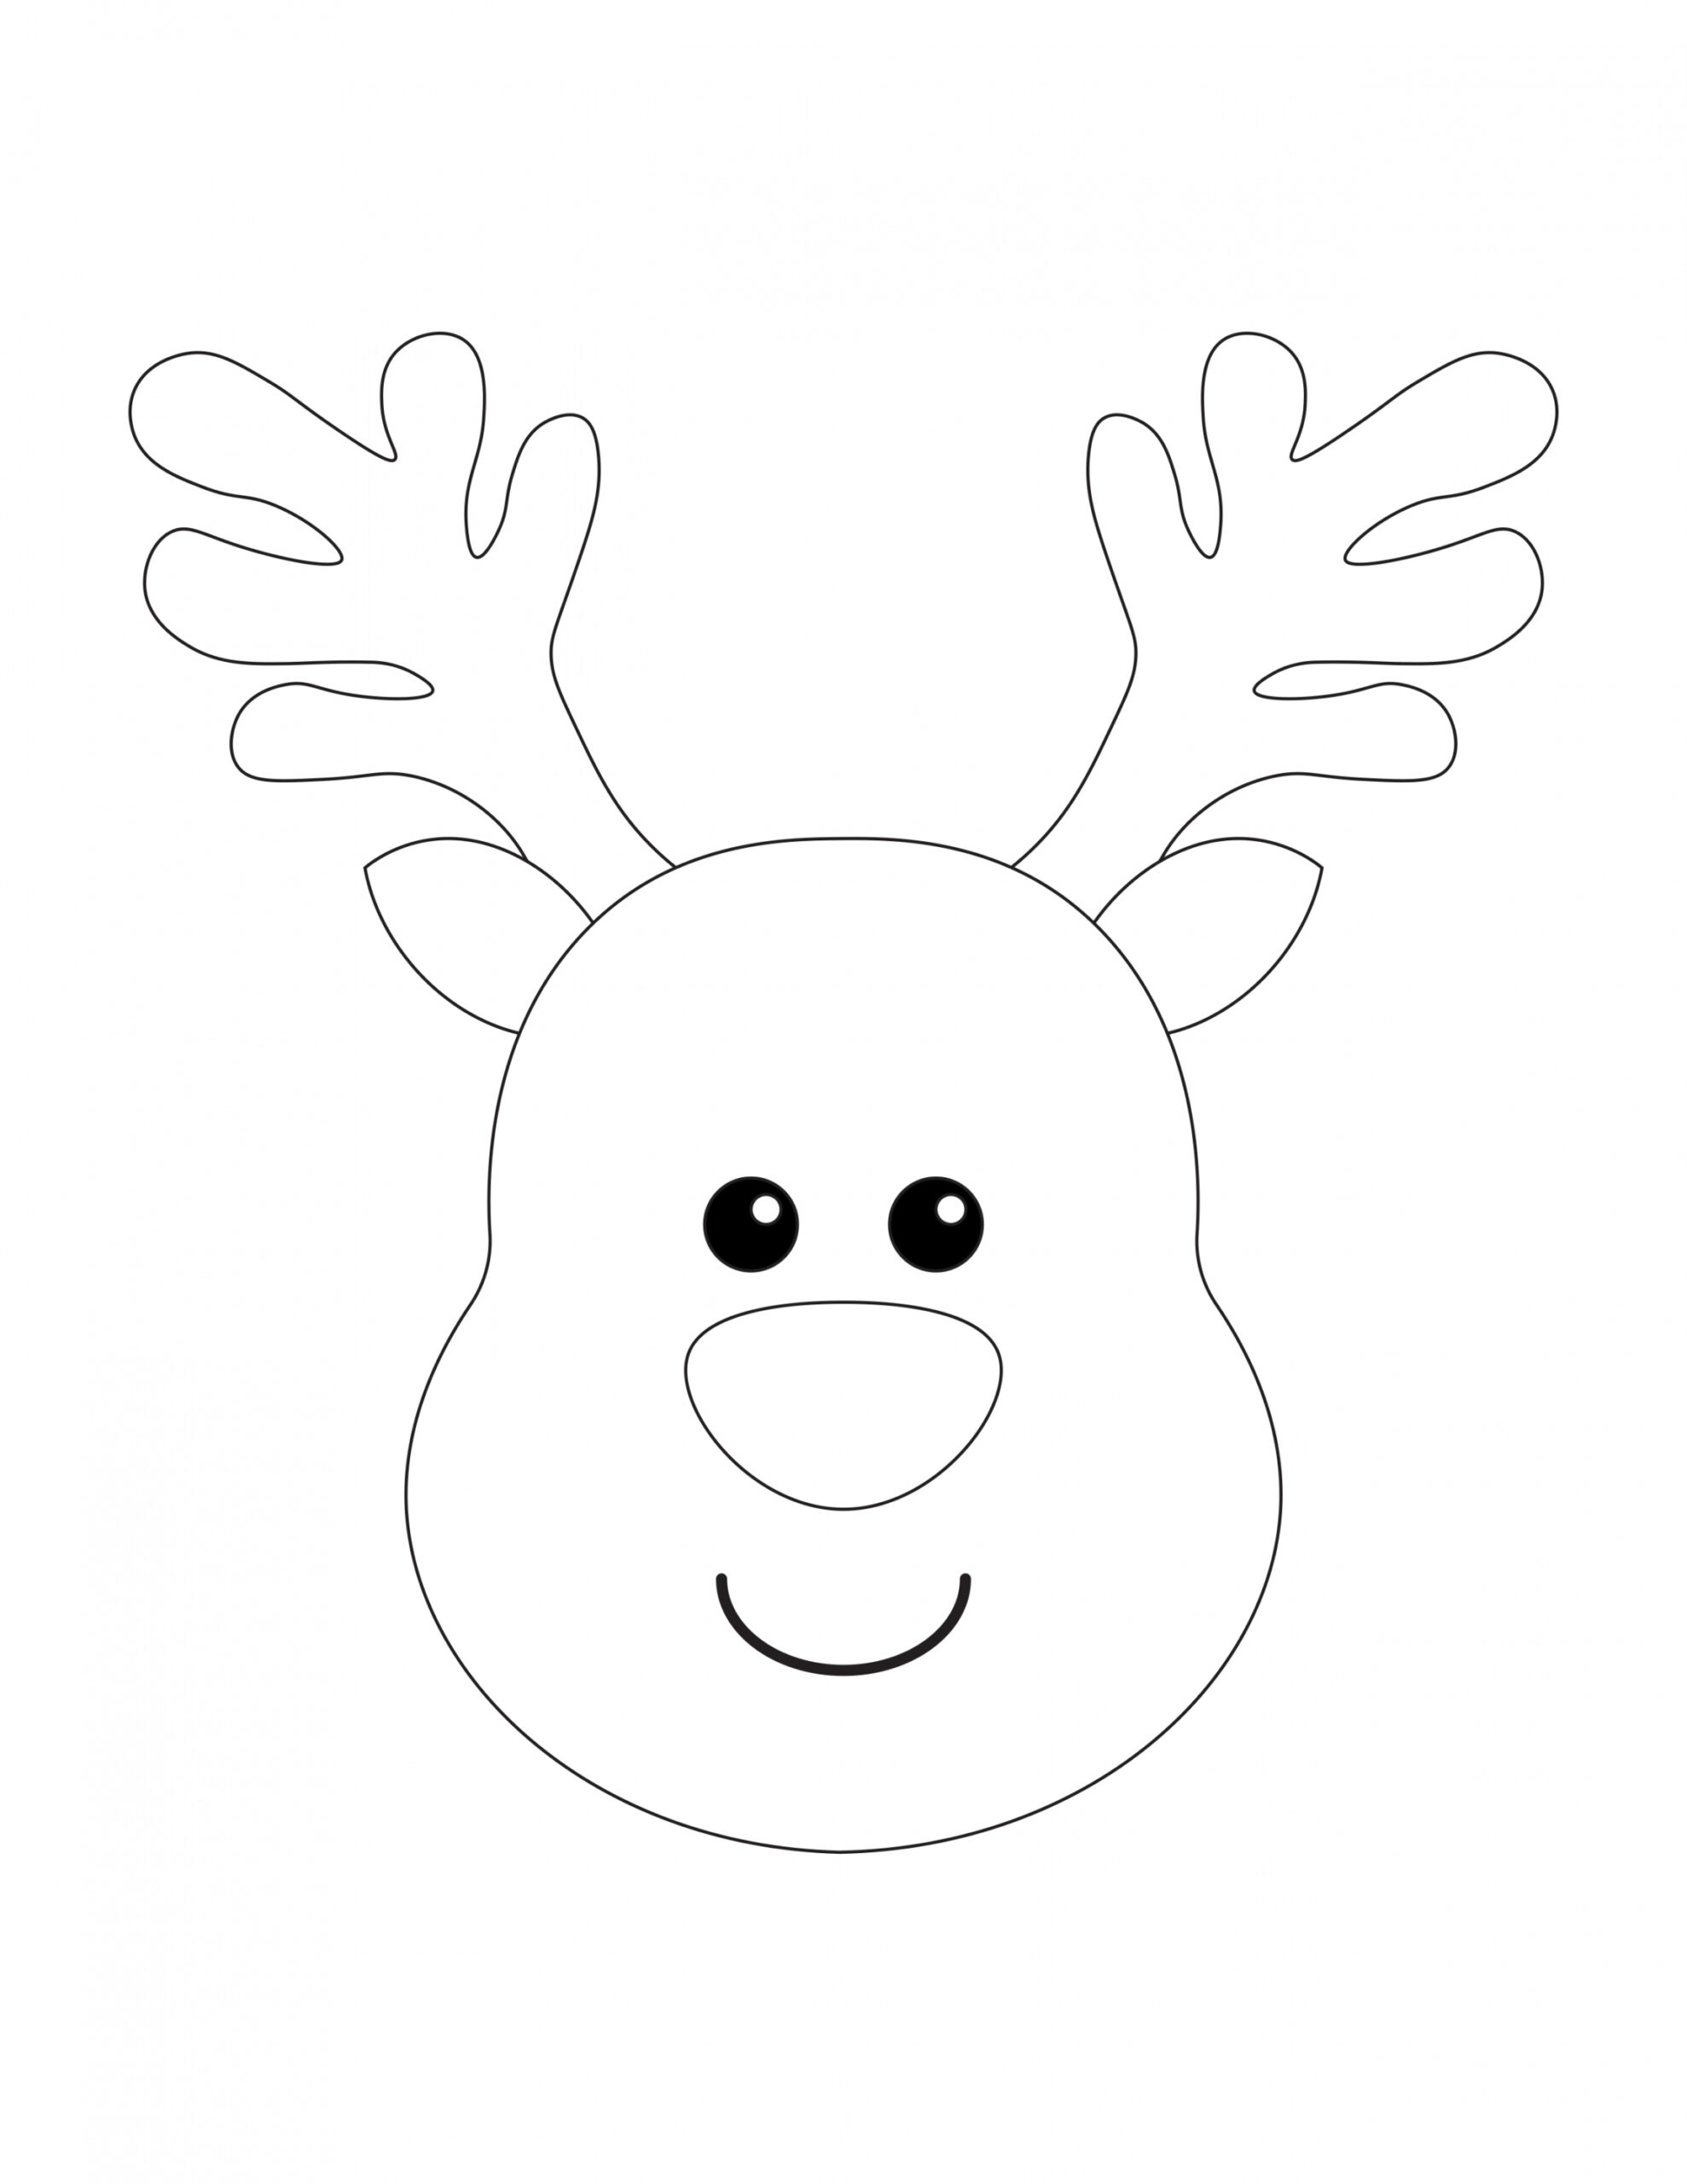 Free Printable Reindeer Templates - Daily Printables - FREE Printables - Reindeer Free Printables